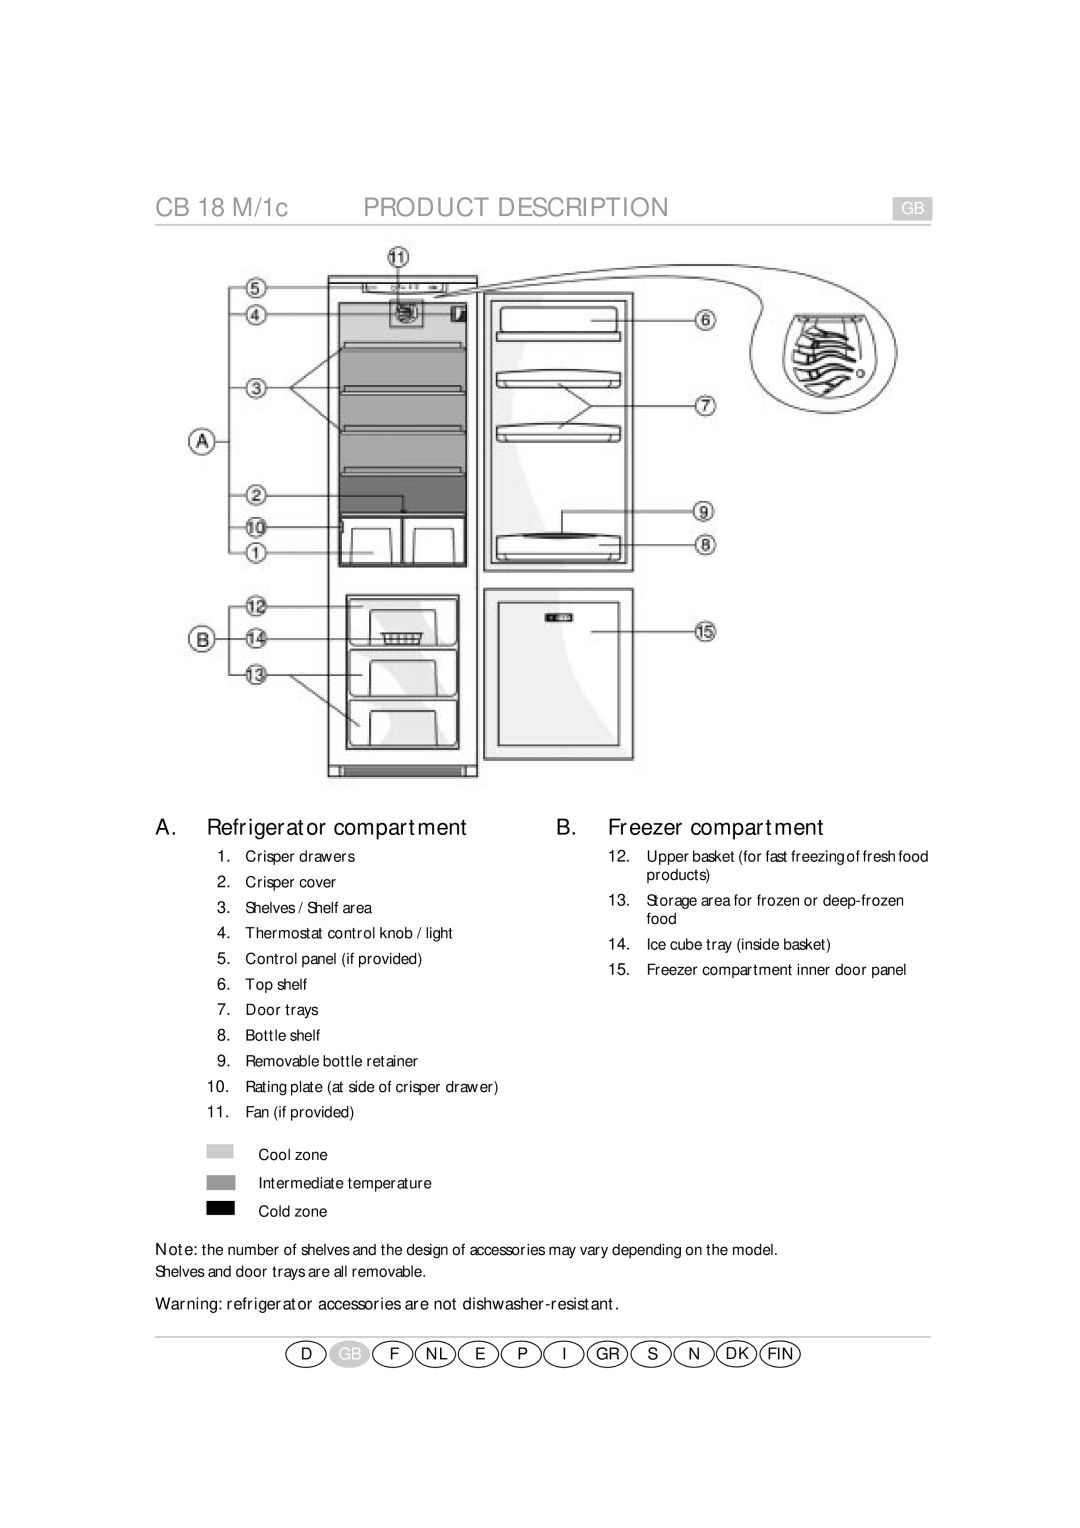 Smeg CR324A manual CB 18 M/1c, A.Refrigerator compartment, B.Freezer compartment, Product Description 